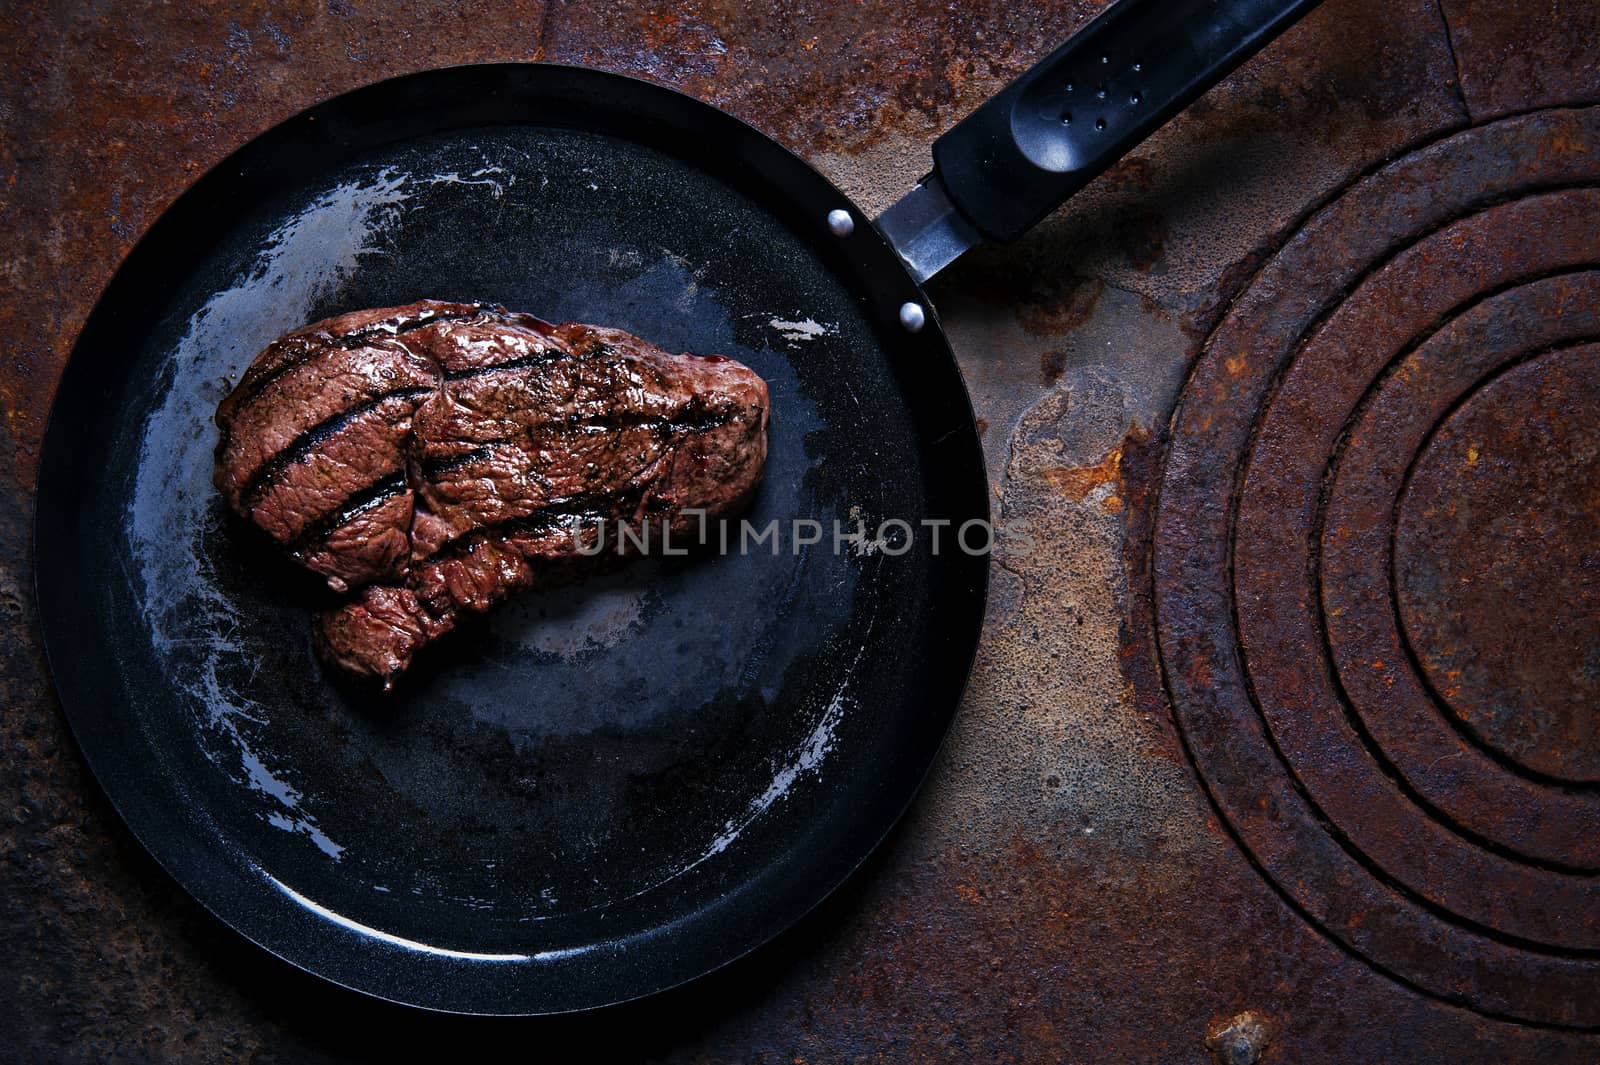 Beef steak in a frying pan standing on the rusty burner